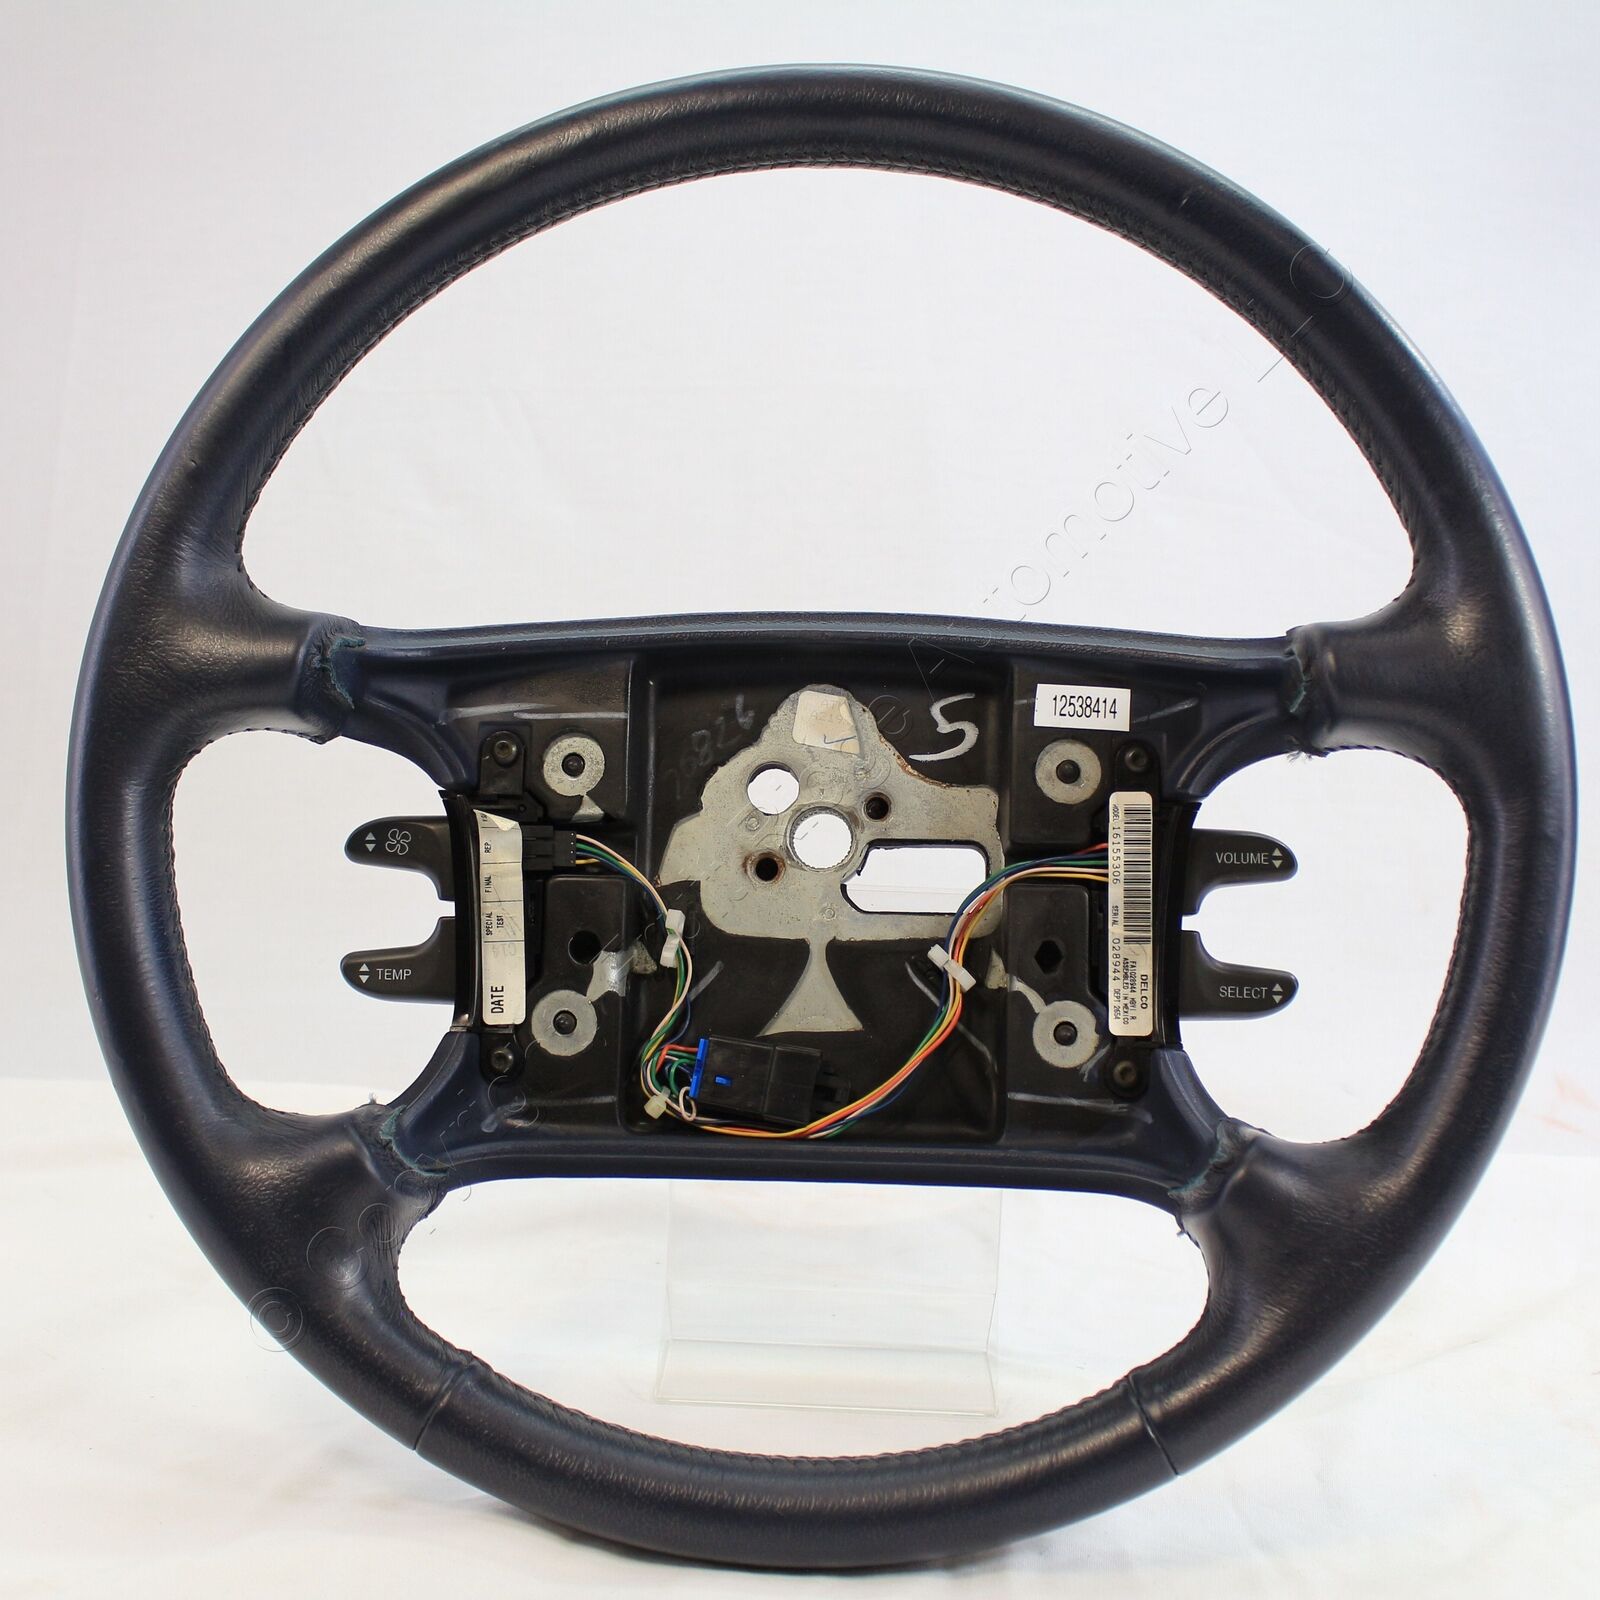 GM OEM #12538414 Blue Steering Wheel w/ Controls fits 96-99 Deville Eldorado